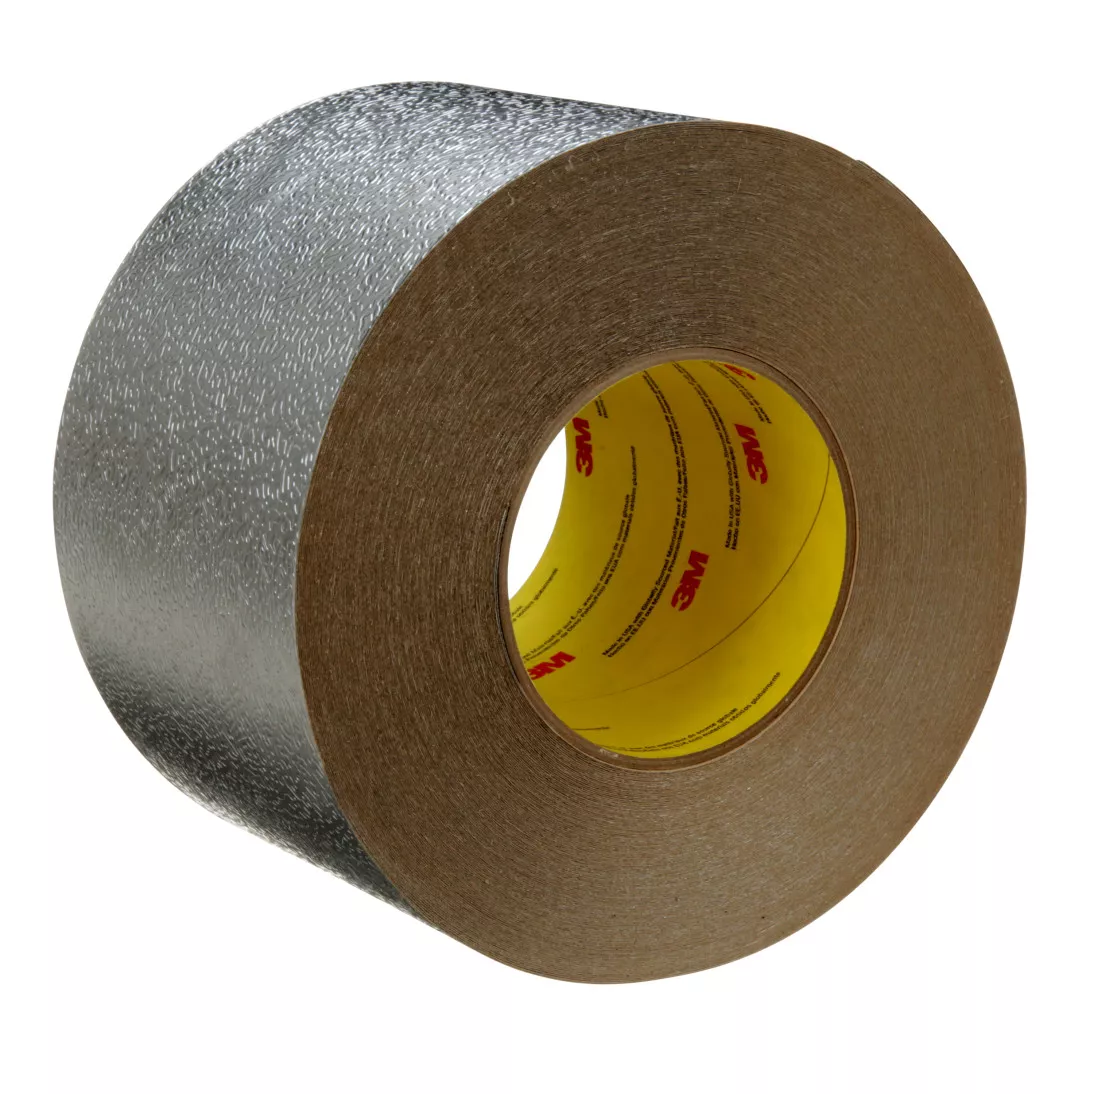 3M™ VentureClad™ Insulation Jacketing Tape 1577CW-E, Silver, 4 in x 50
yd, 4 rolls per case